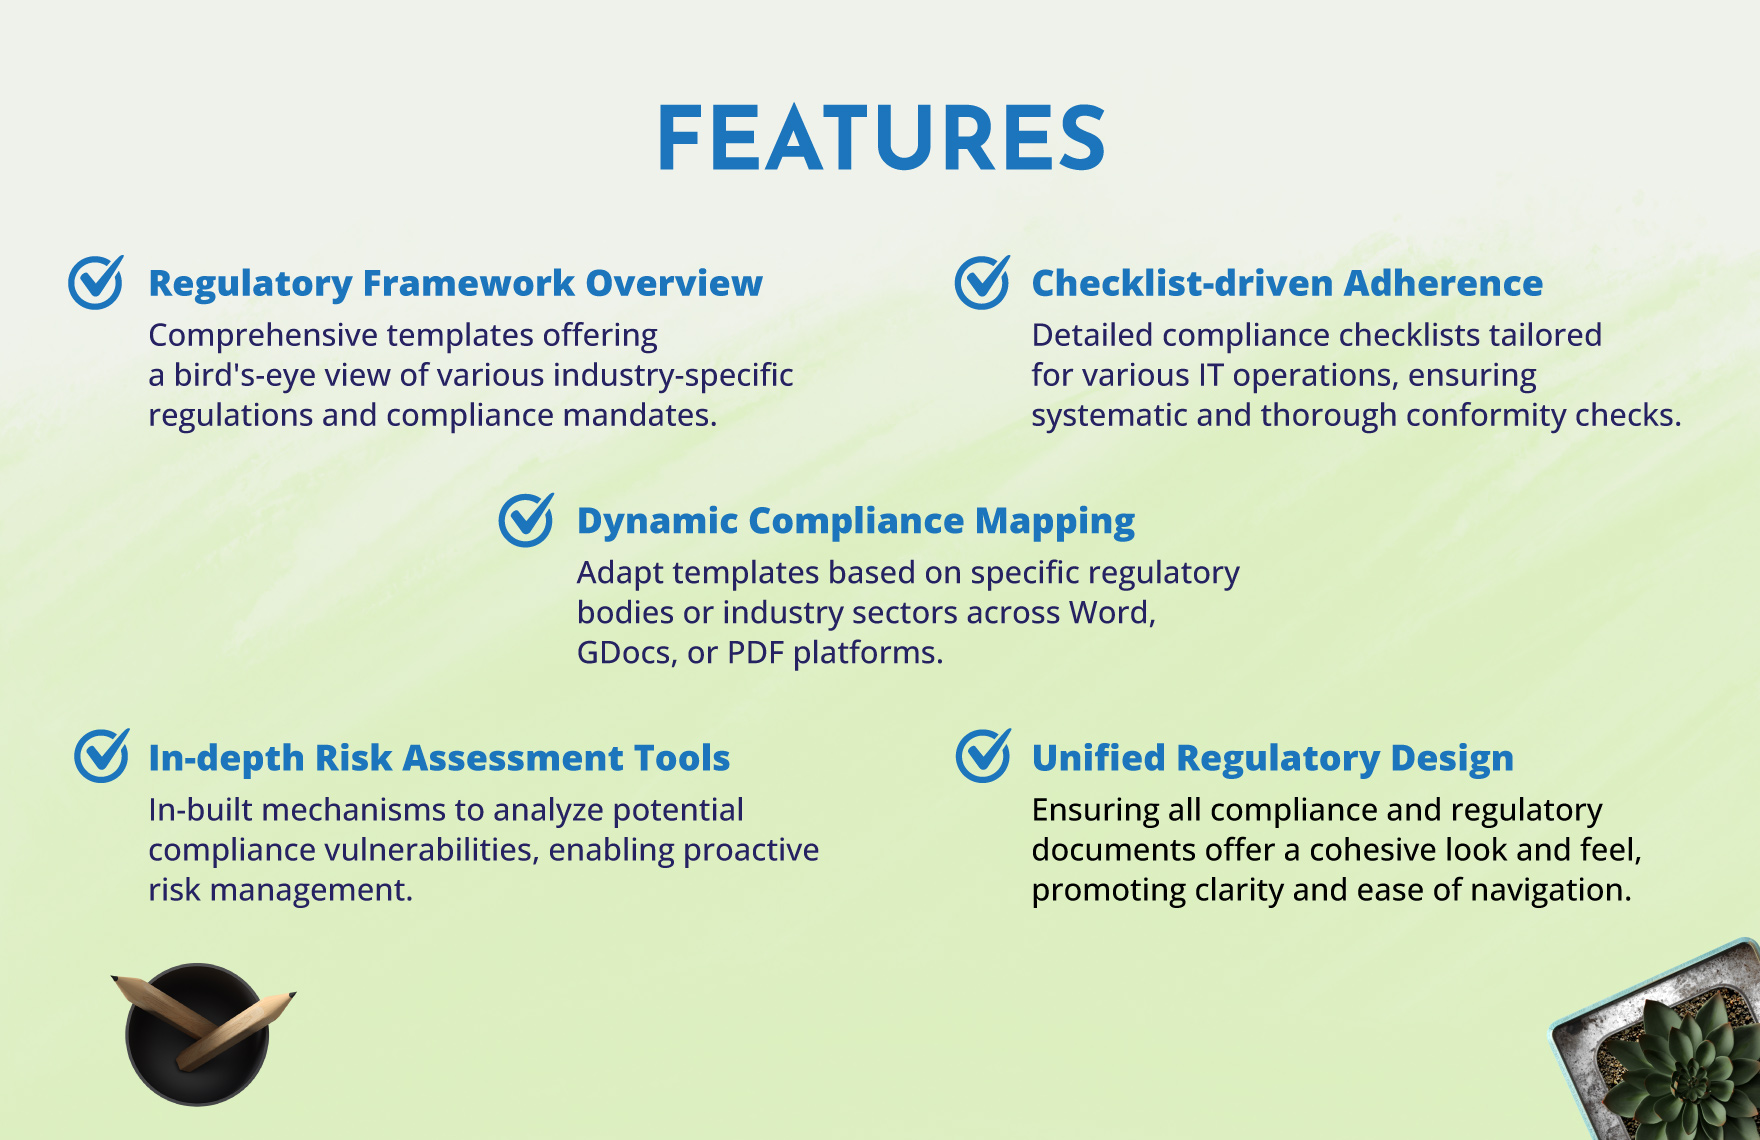 IT Compliance Audit Checklist Template